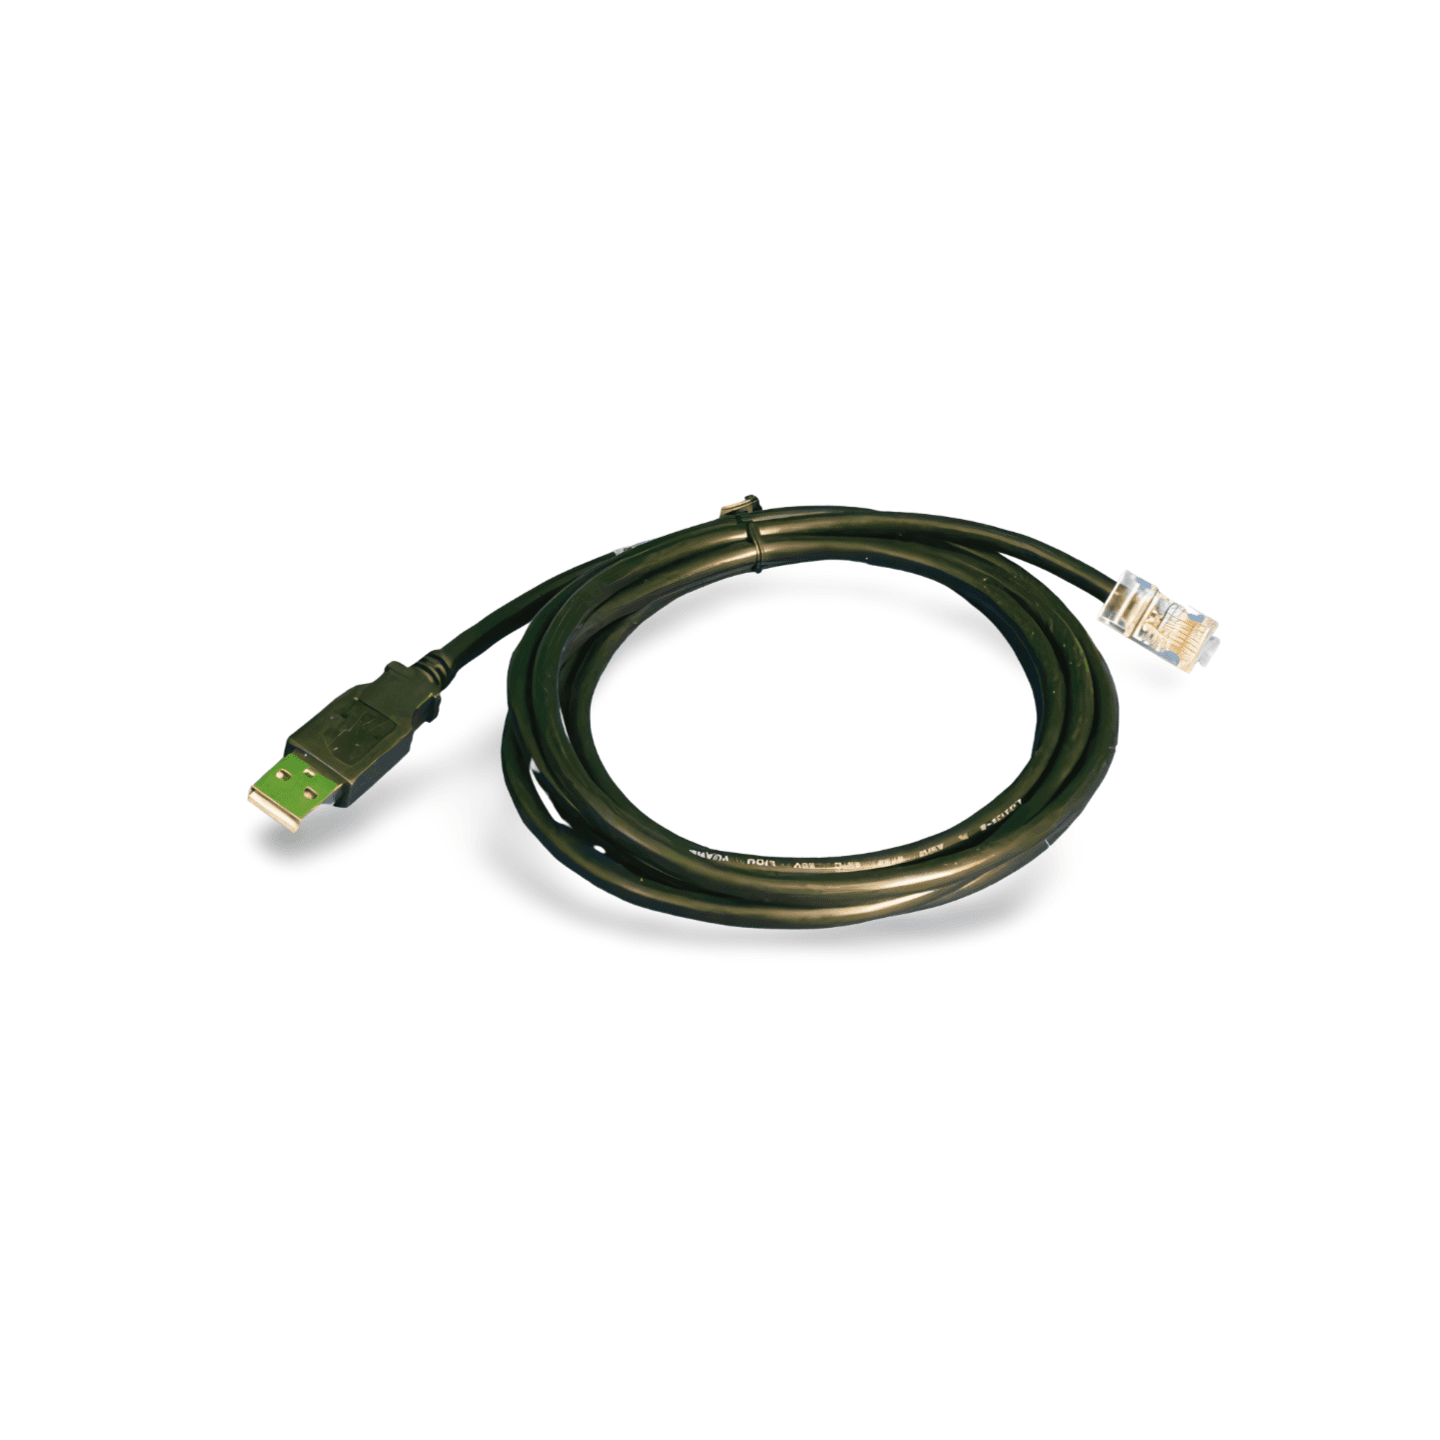 10ft UPS Tripp Lite USB to RJ45 Cable 731093 Compatible black